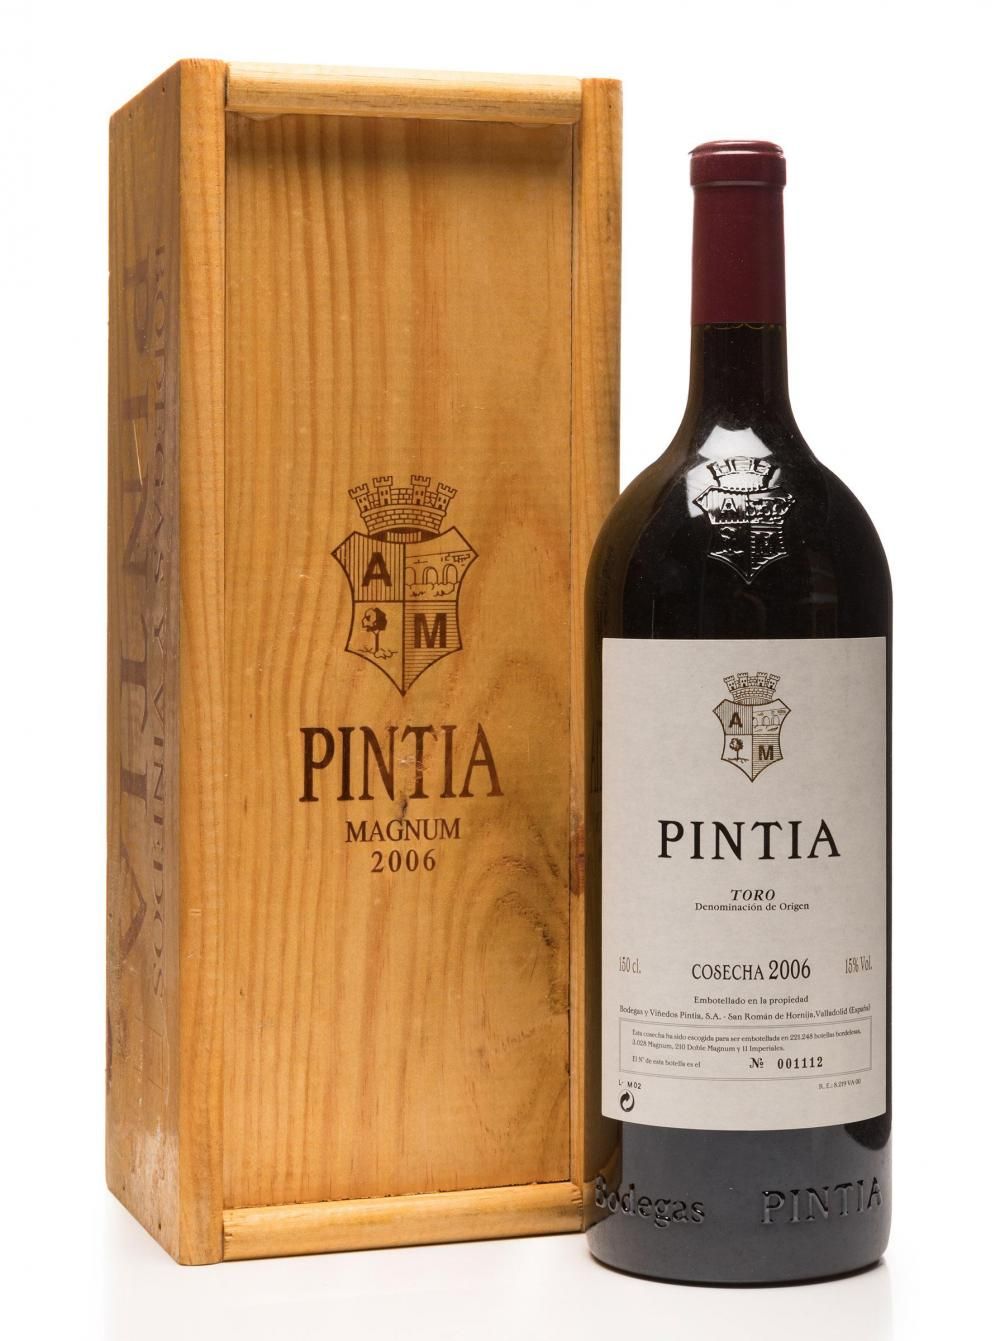 Null 1 bottiglia di Pintia de Vega Sicilia, 2006. Magnum (1,5 L). Toro. Spagna.
&hellip;